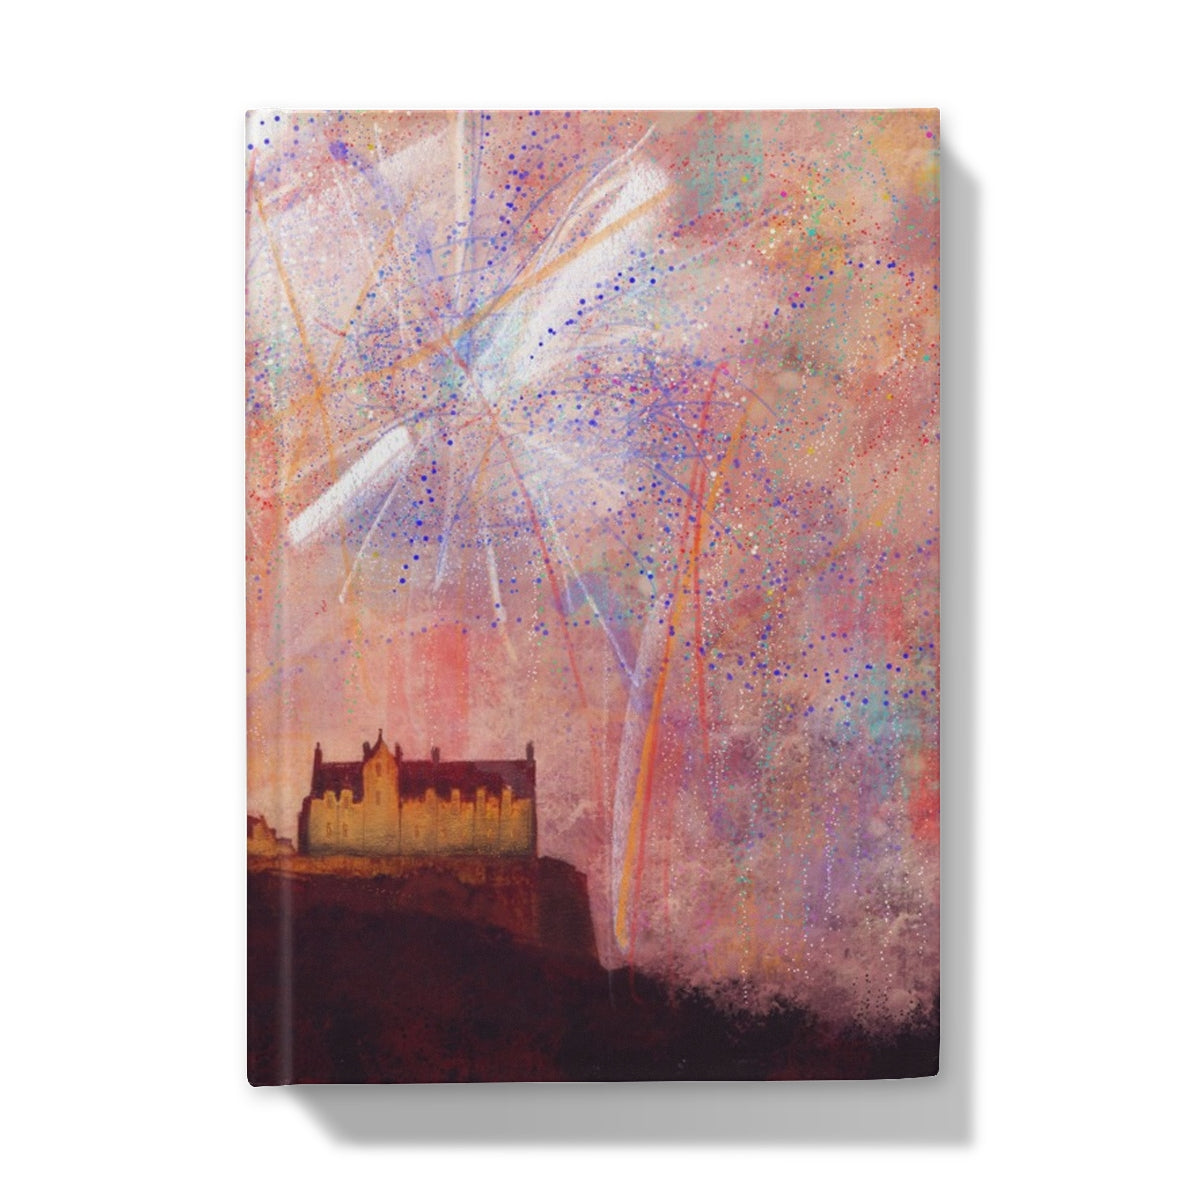 Edinburgh Castle Fireworks Art Gifts Hardback Journal-Journals & Notebooks-Edinburgh & Glasgow Art Gallery-5"x7"-Plain-Paintings, Prints, Homeware, Art Gifts From Scotland By Scottish Artist Kevin Hunter